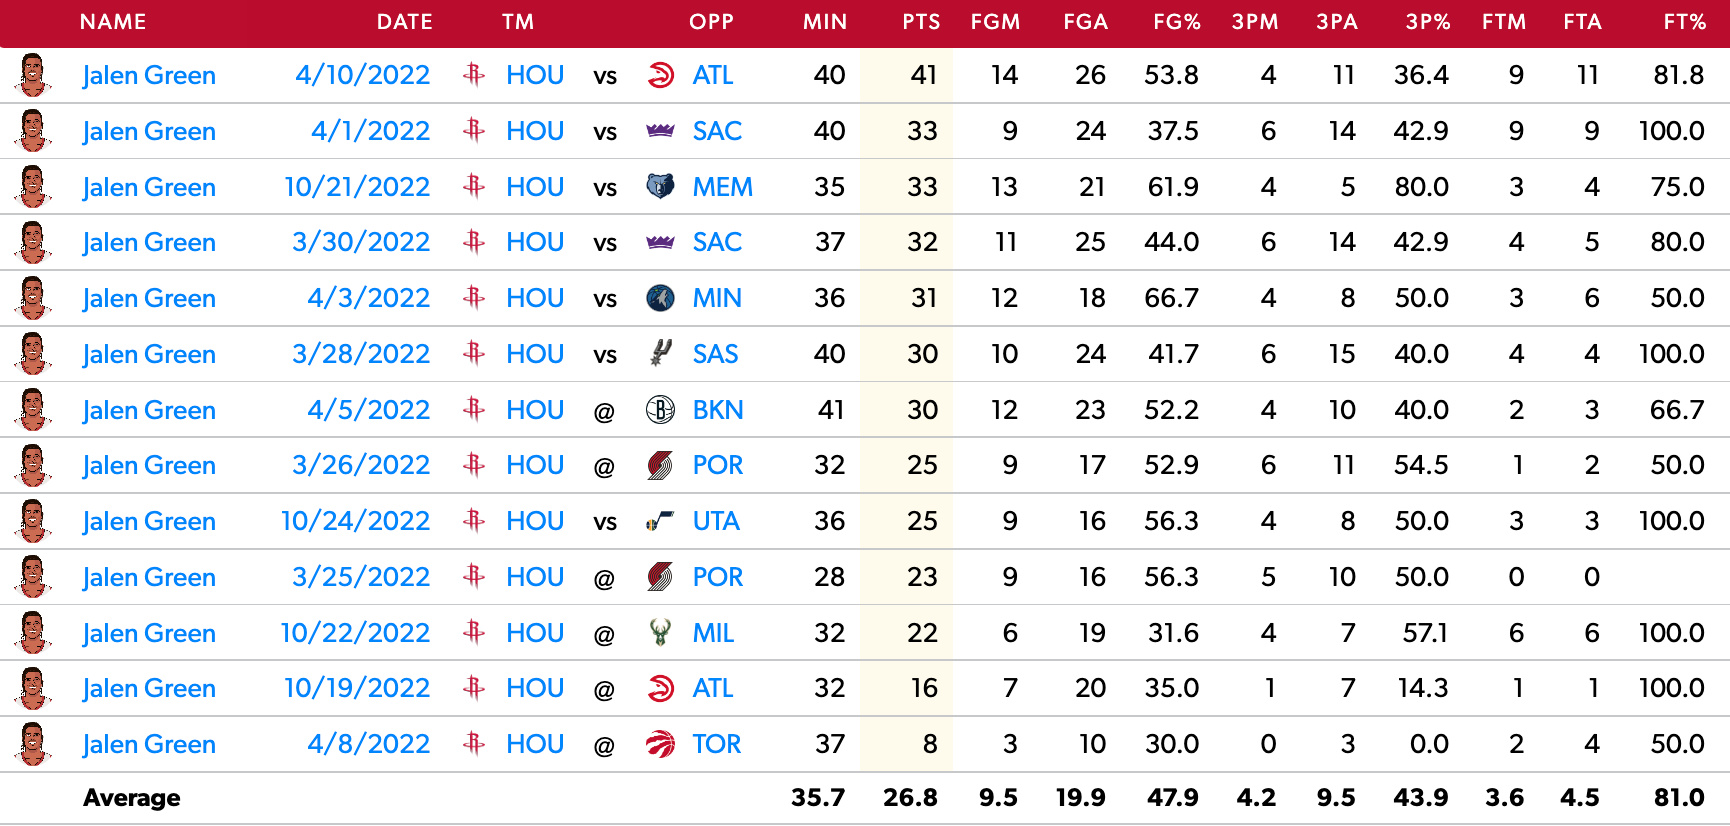 Jalen Green's last 13 NBA games, dating back to last season.